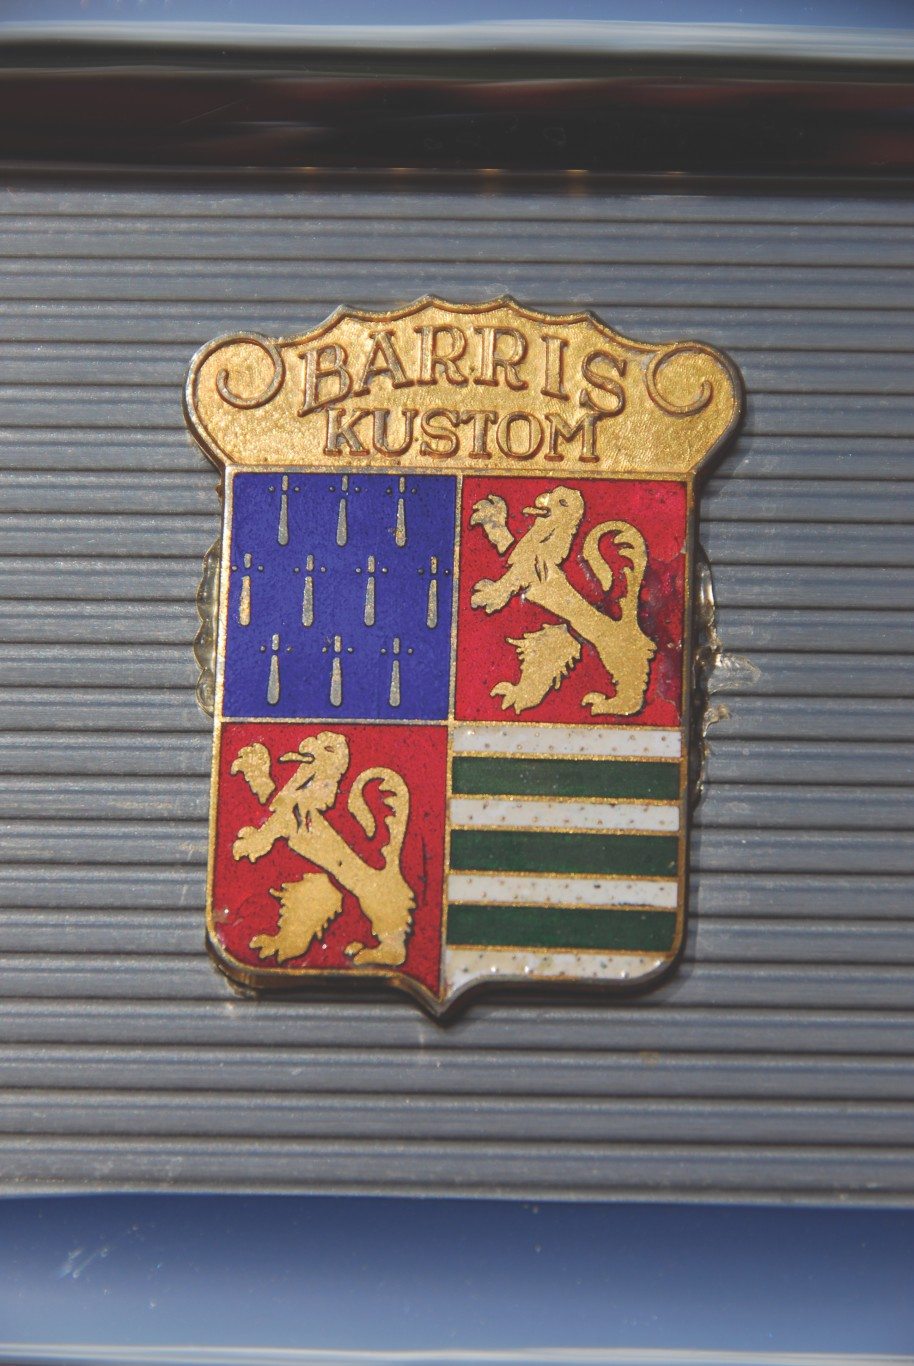 1955 Chevy Aztec Custom Barris Kustom Badge